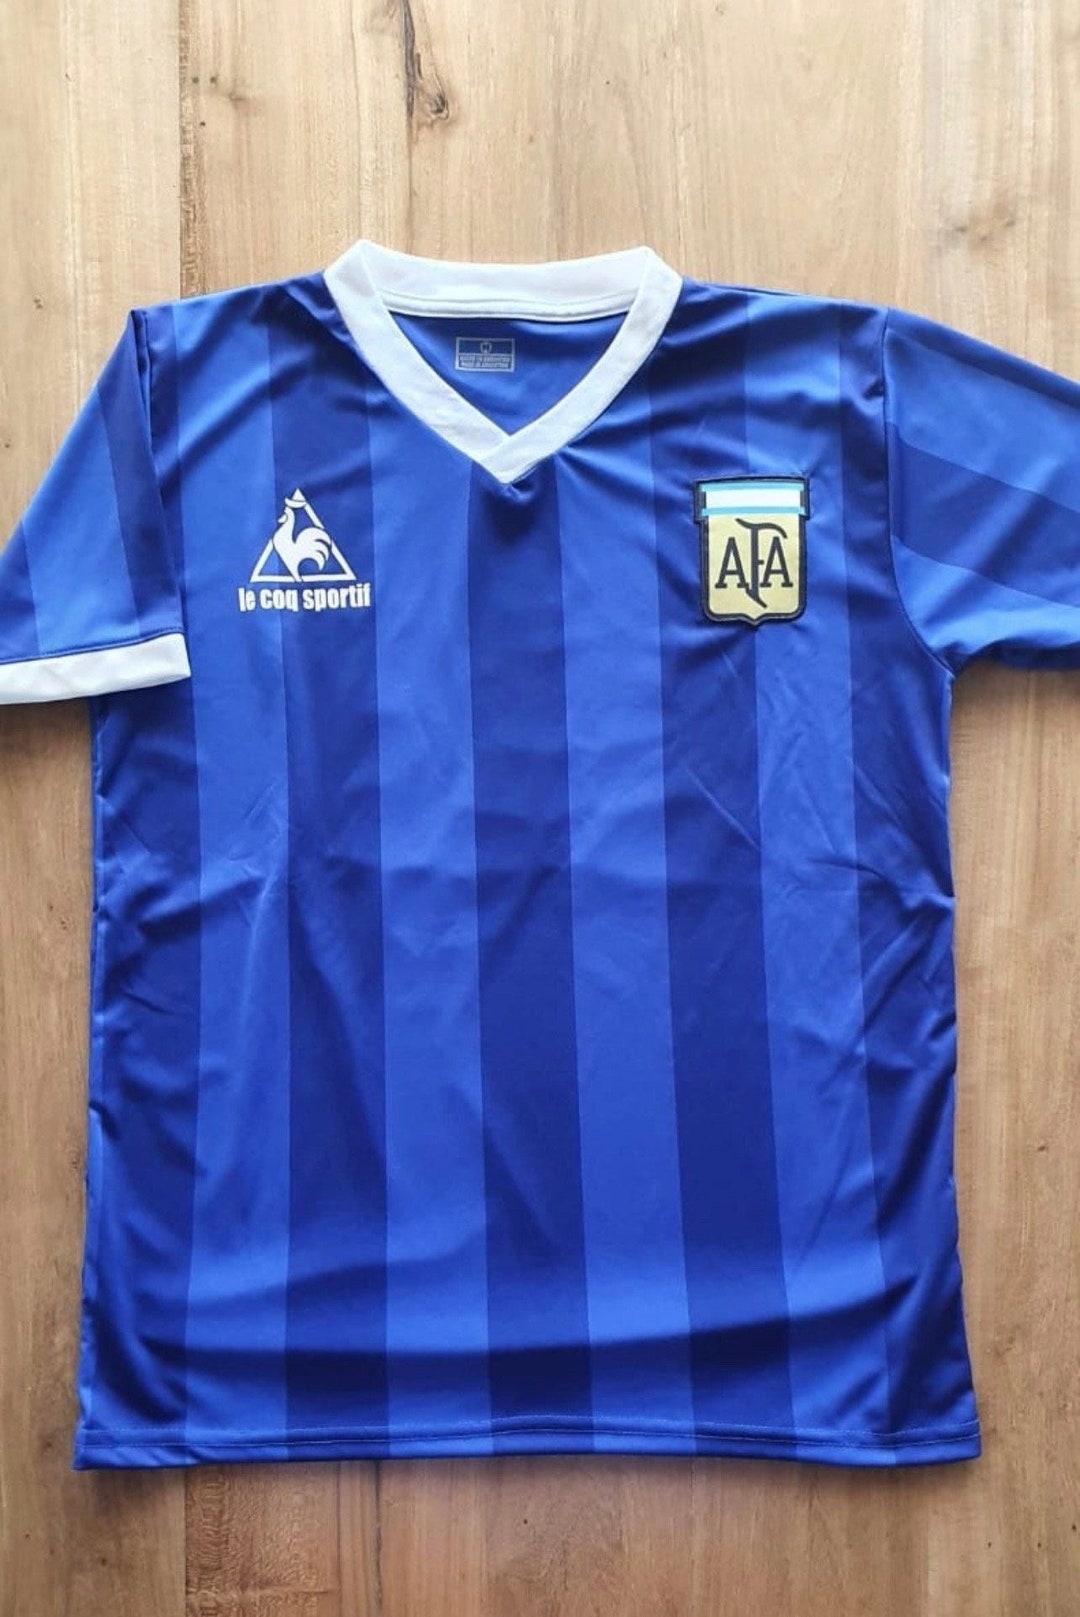 Retro Argentina Shirt 1986,Argentina Football Kit 1986,S-XL 1986 Argentina  Home retro jerseys 1986 Argentina home Vintage jerse